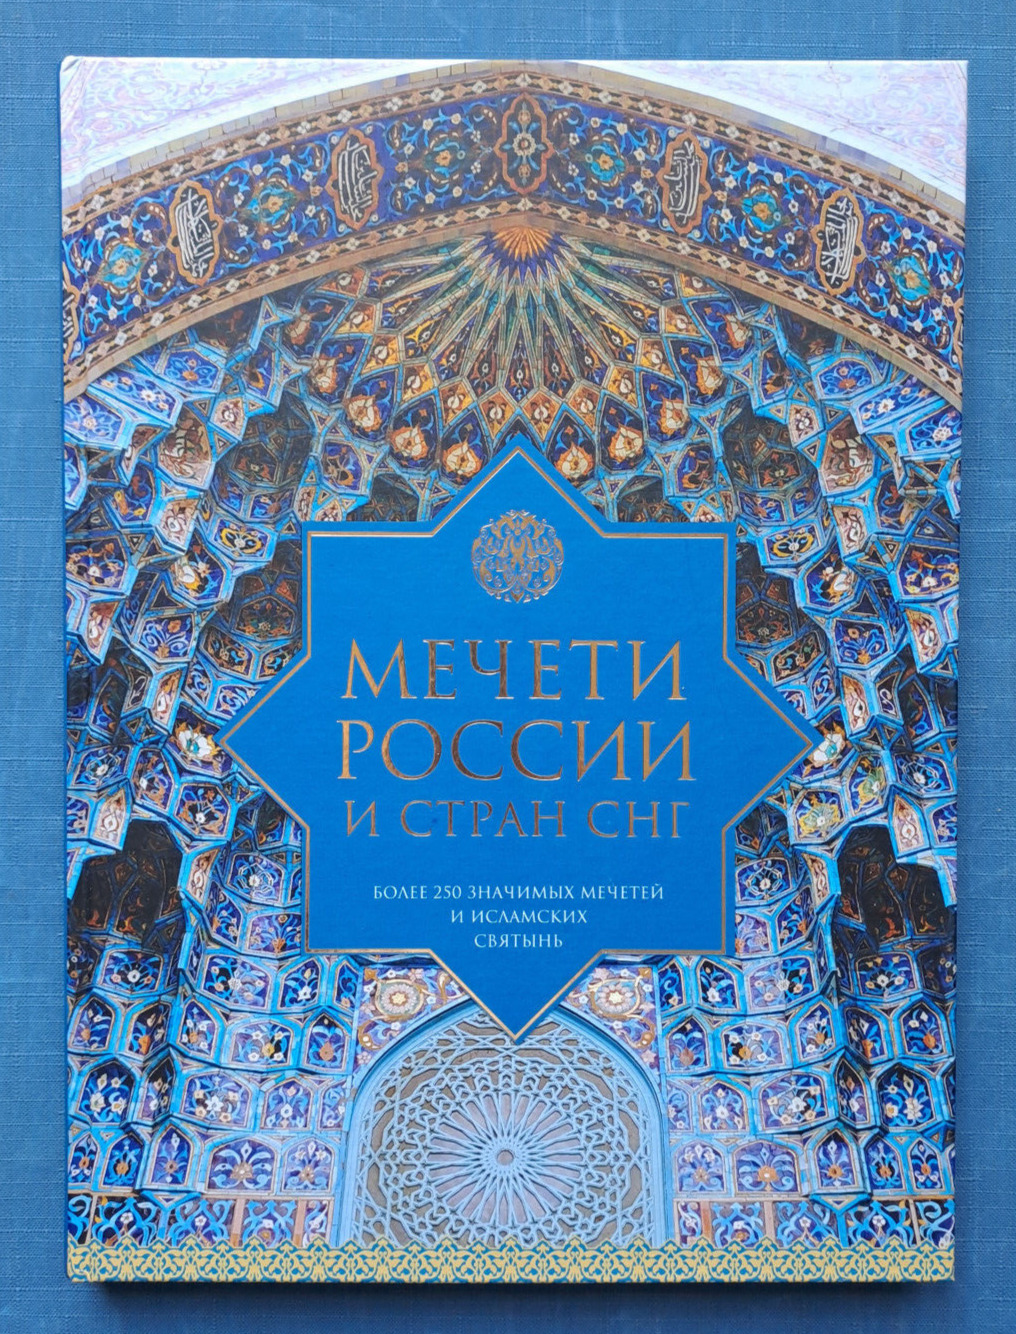 2015 Mosques of Russia Chechnya Dagestan Azerbaijan Siberia Islam album book